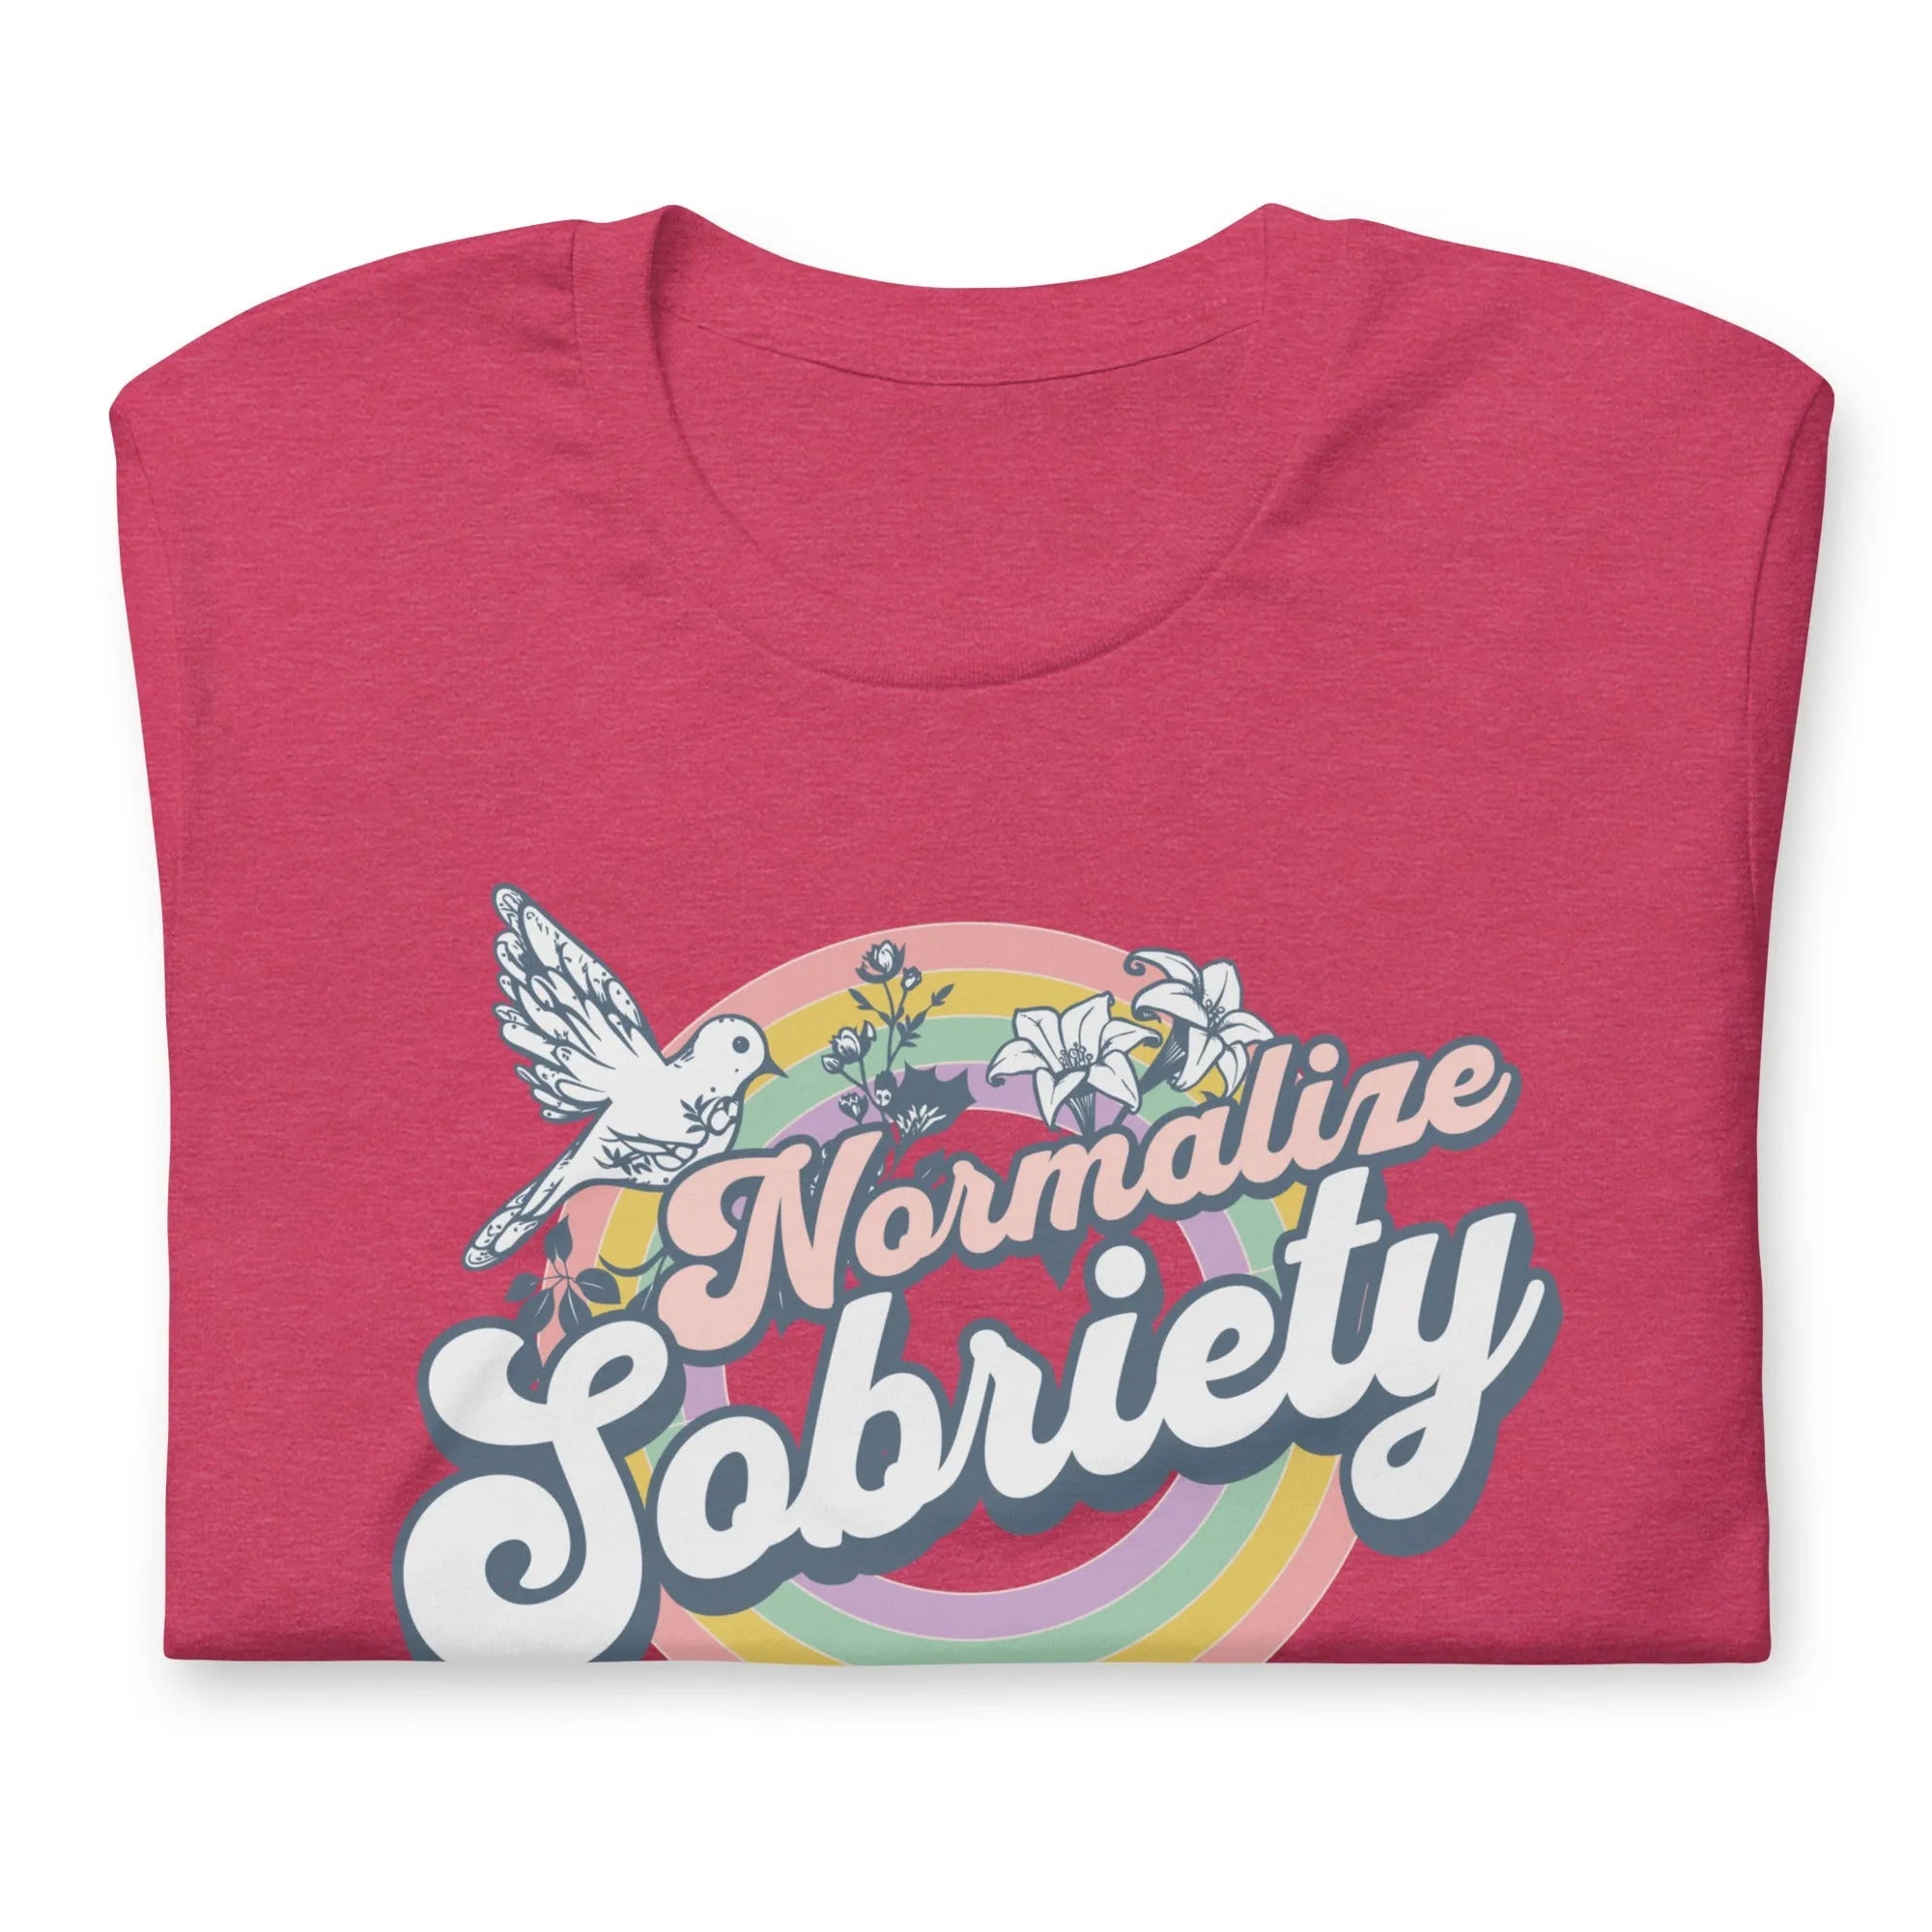 Normalize Sobriety - Unisex t-shirt - | Sobervation